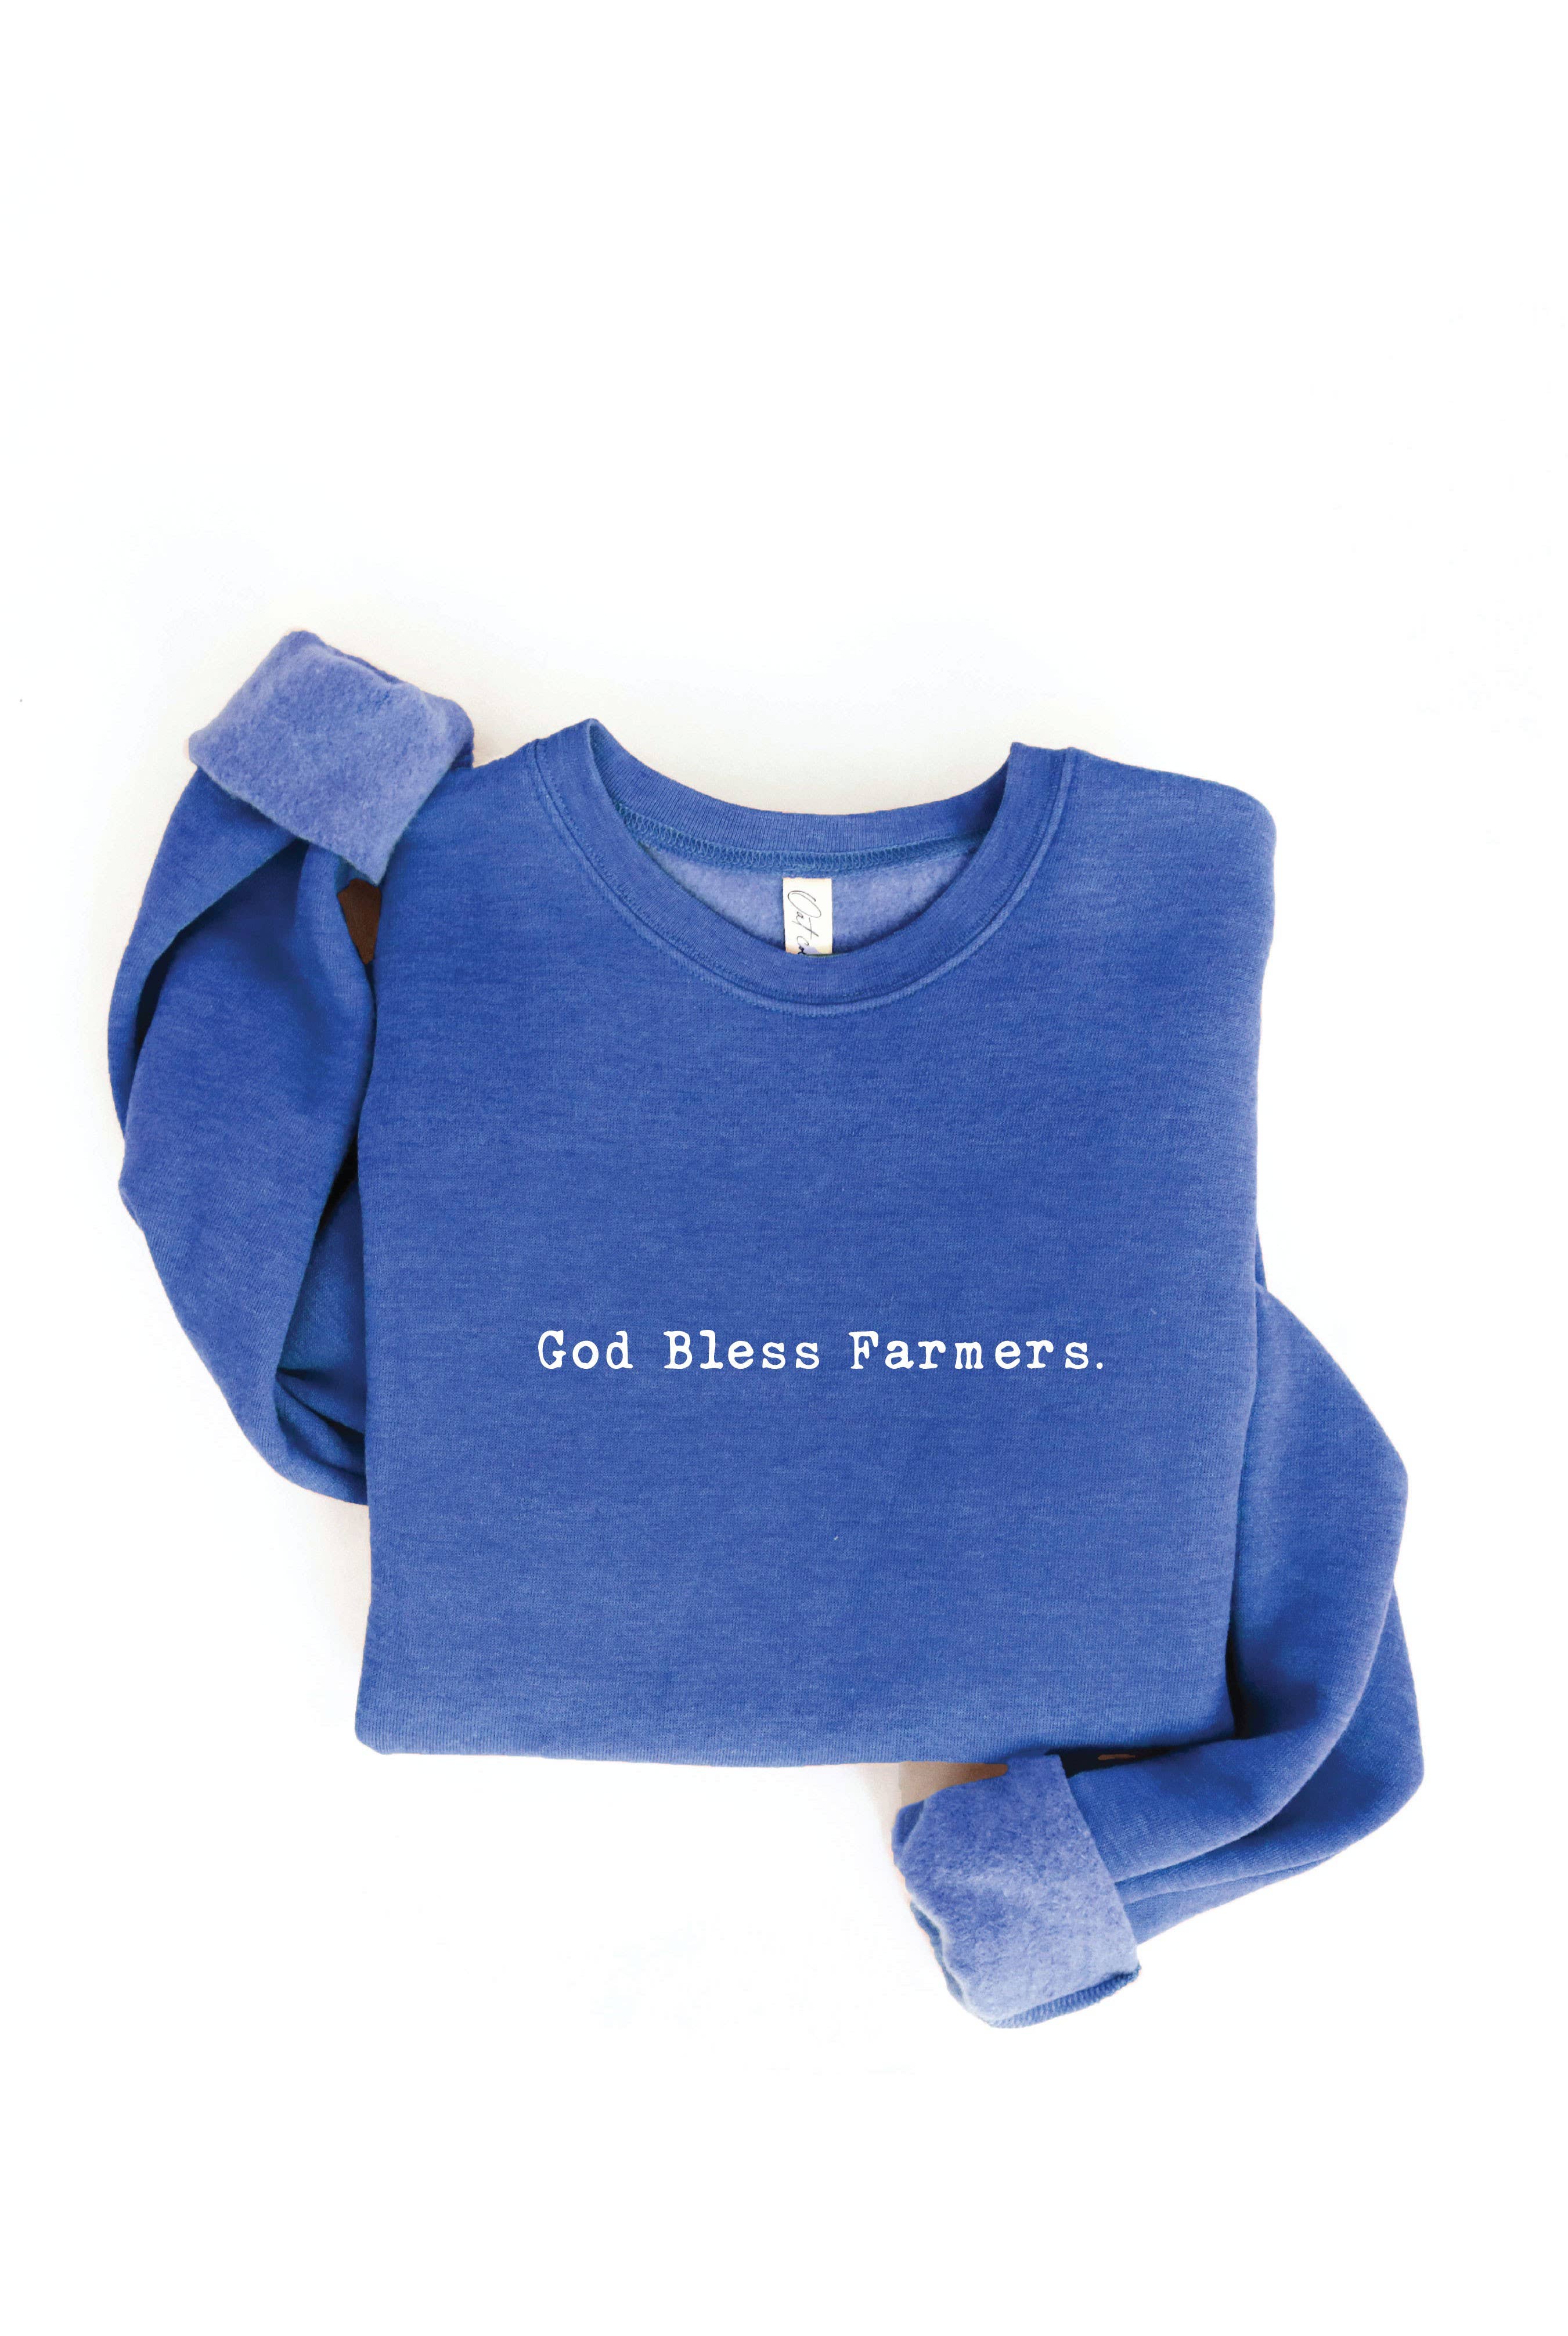 GOD BLESS FARMERS. Graphic Sweatshirt: XL / BLACK